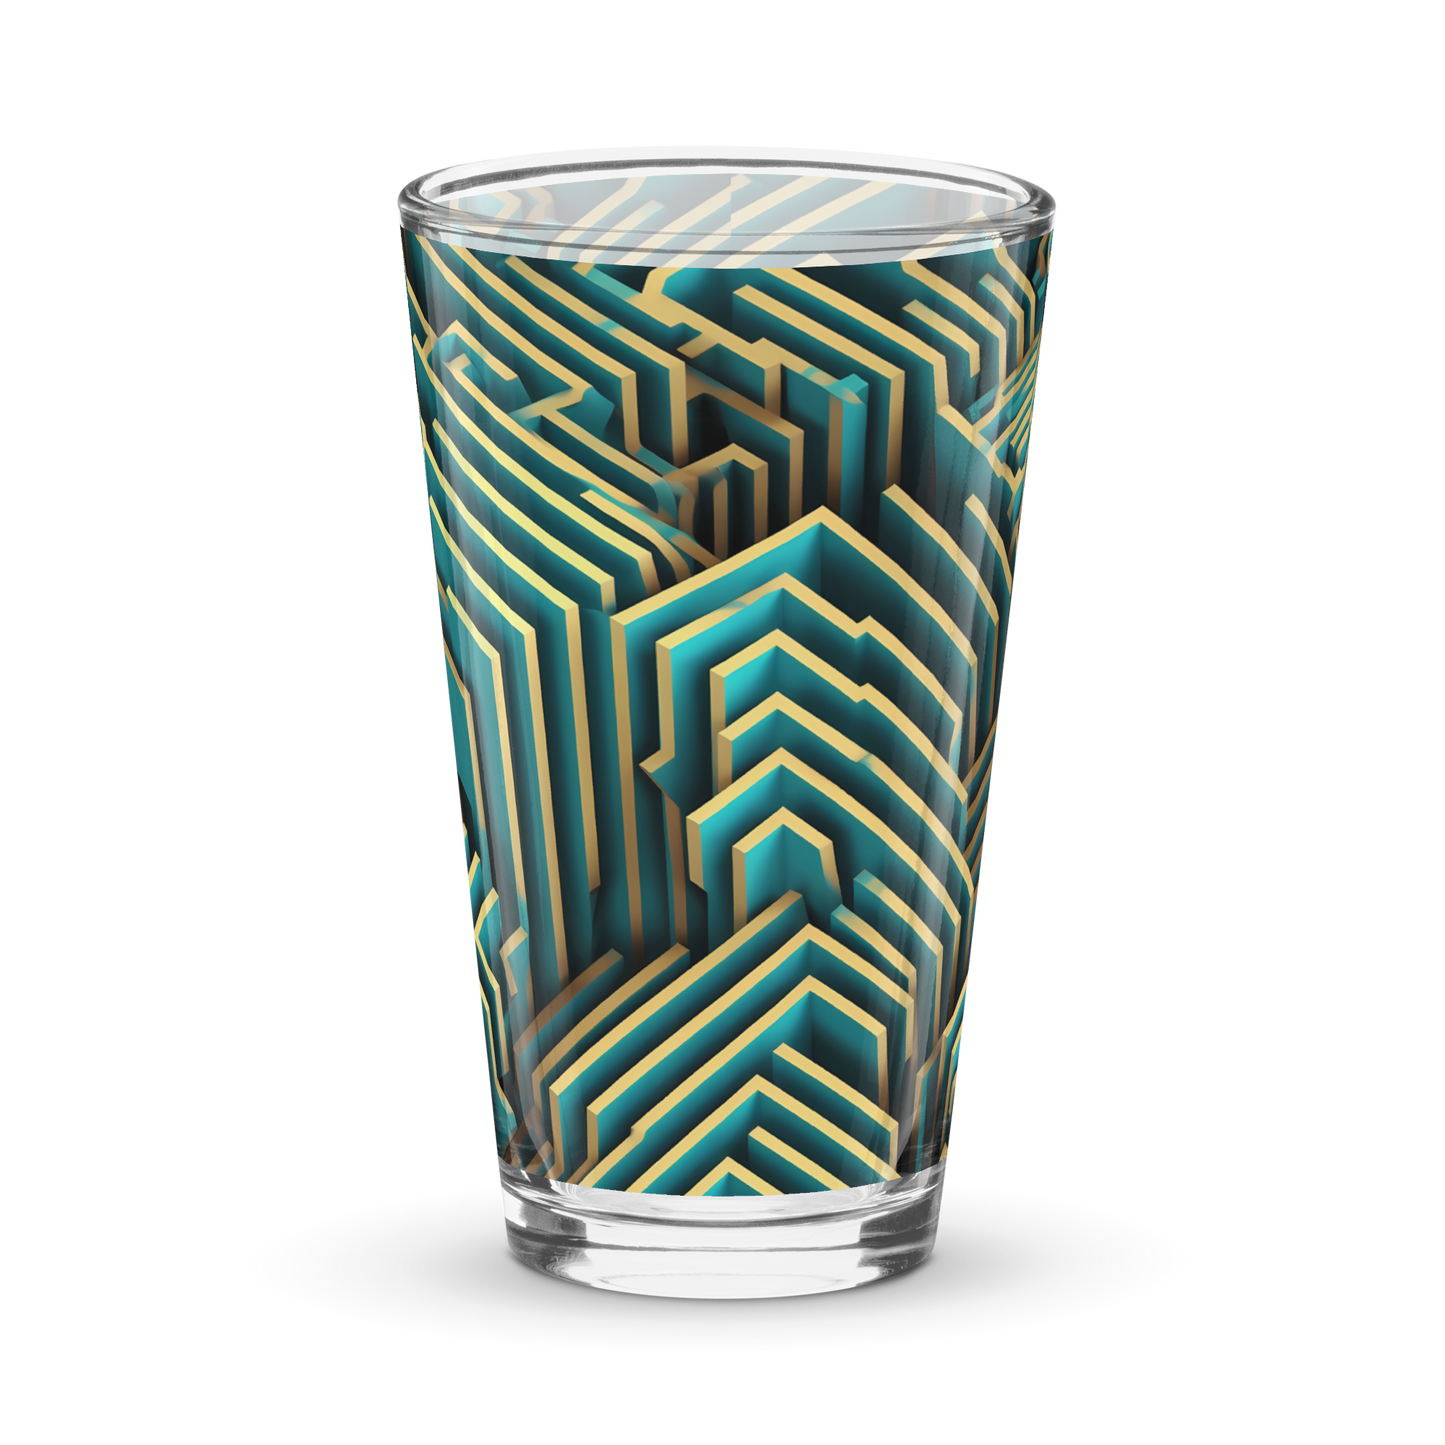 3D Maze Illusion | 3D Patterns | Shaker Pint Glass (16 oz) - #5